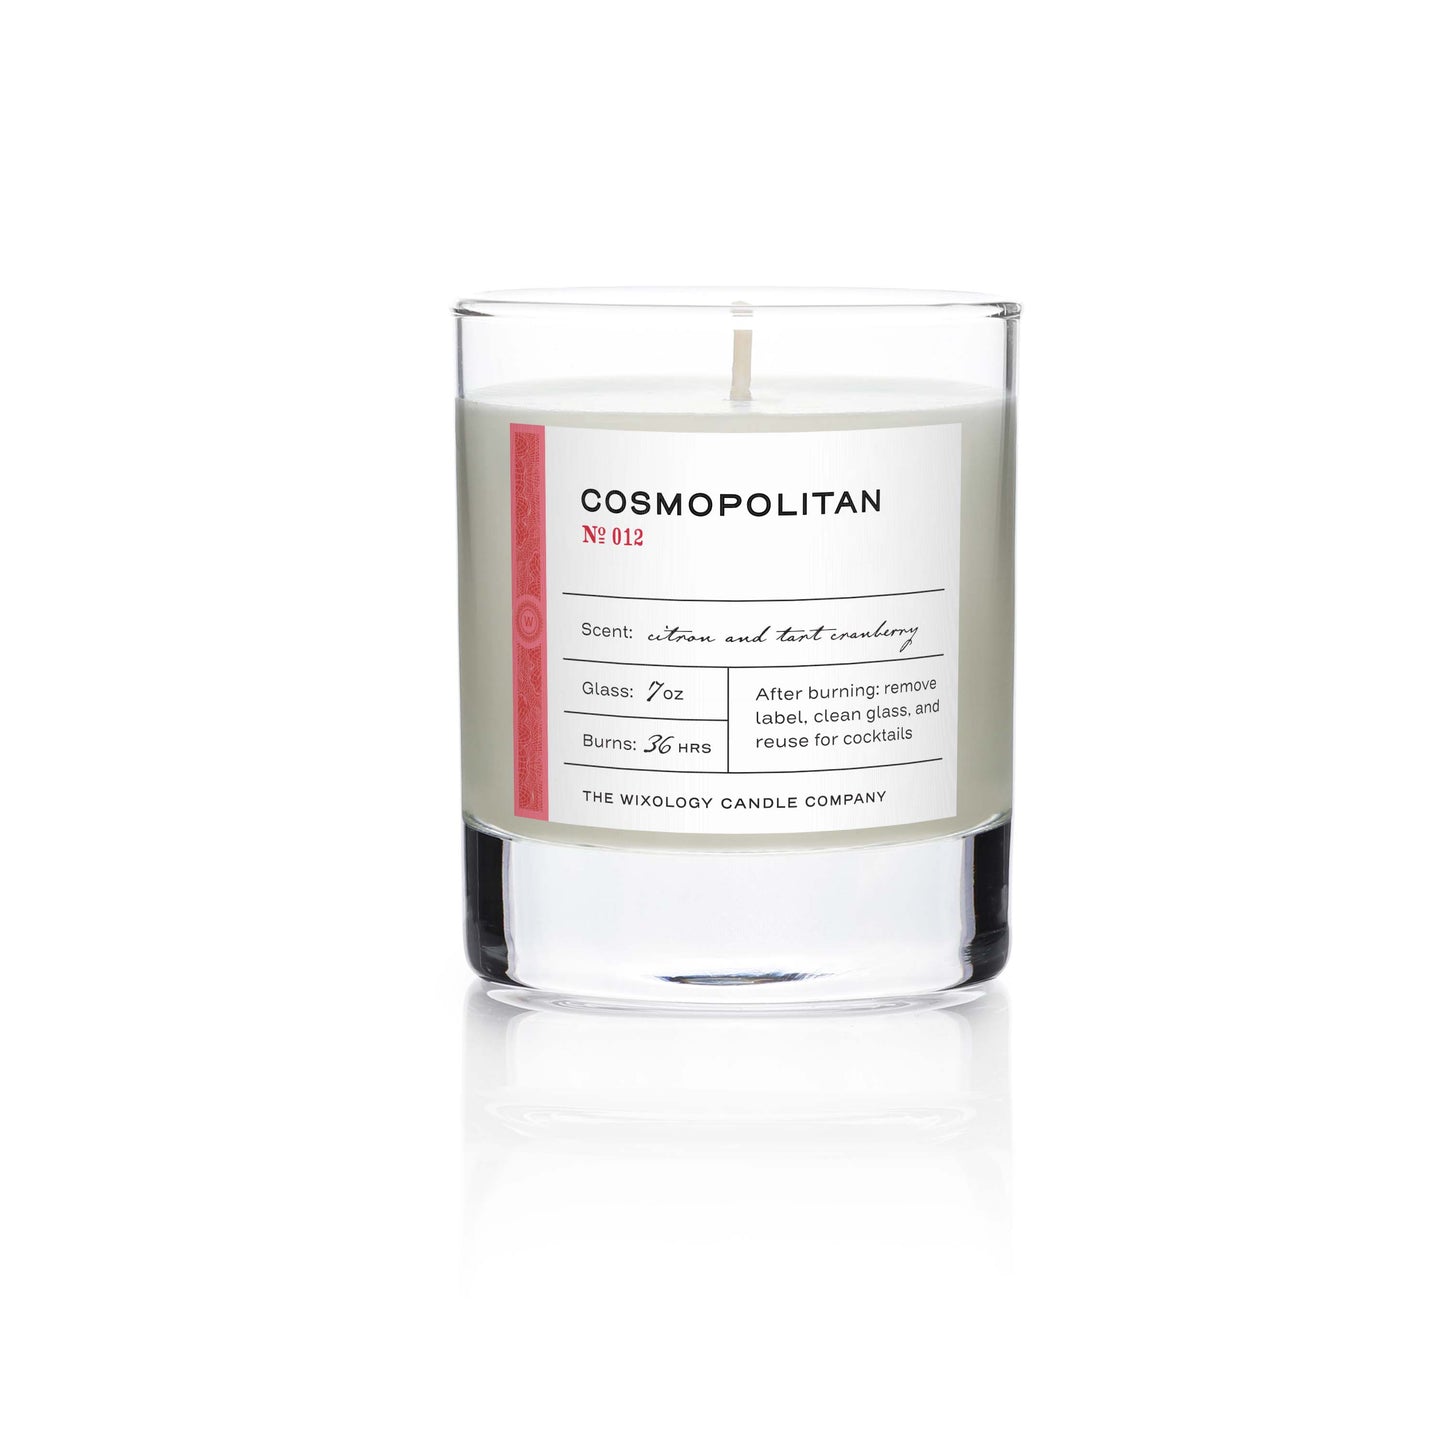 Cosmopolitan Candle (7 oz. glass)